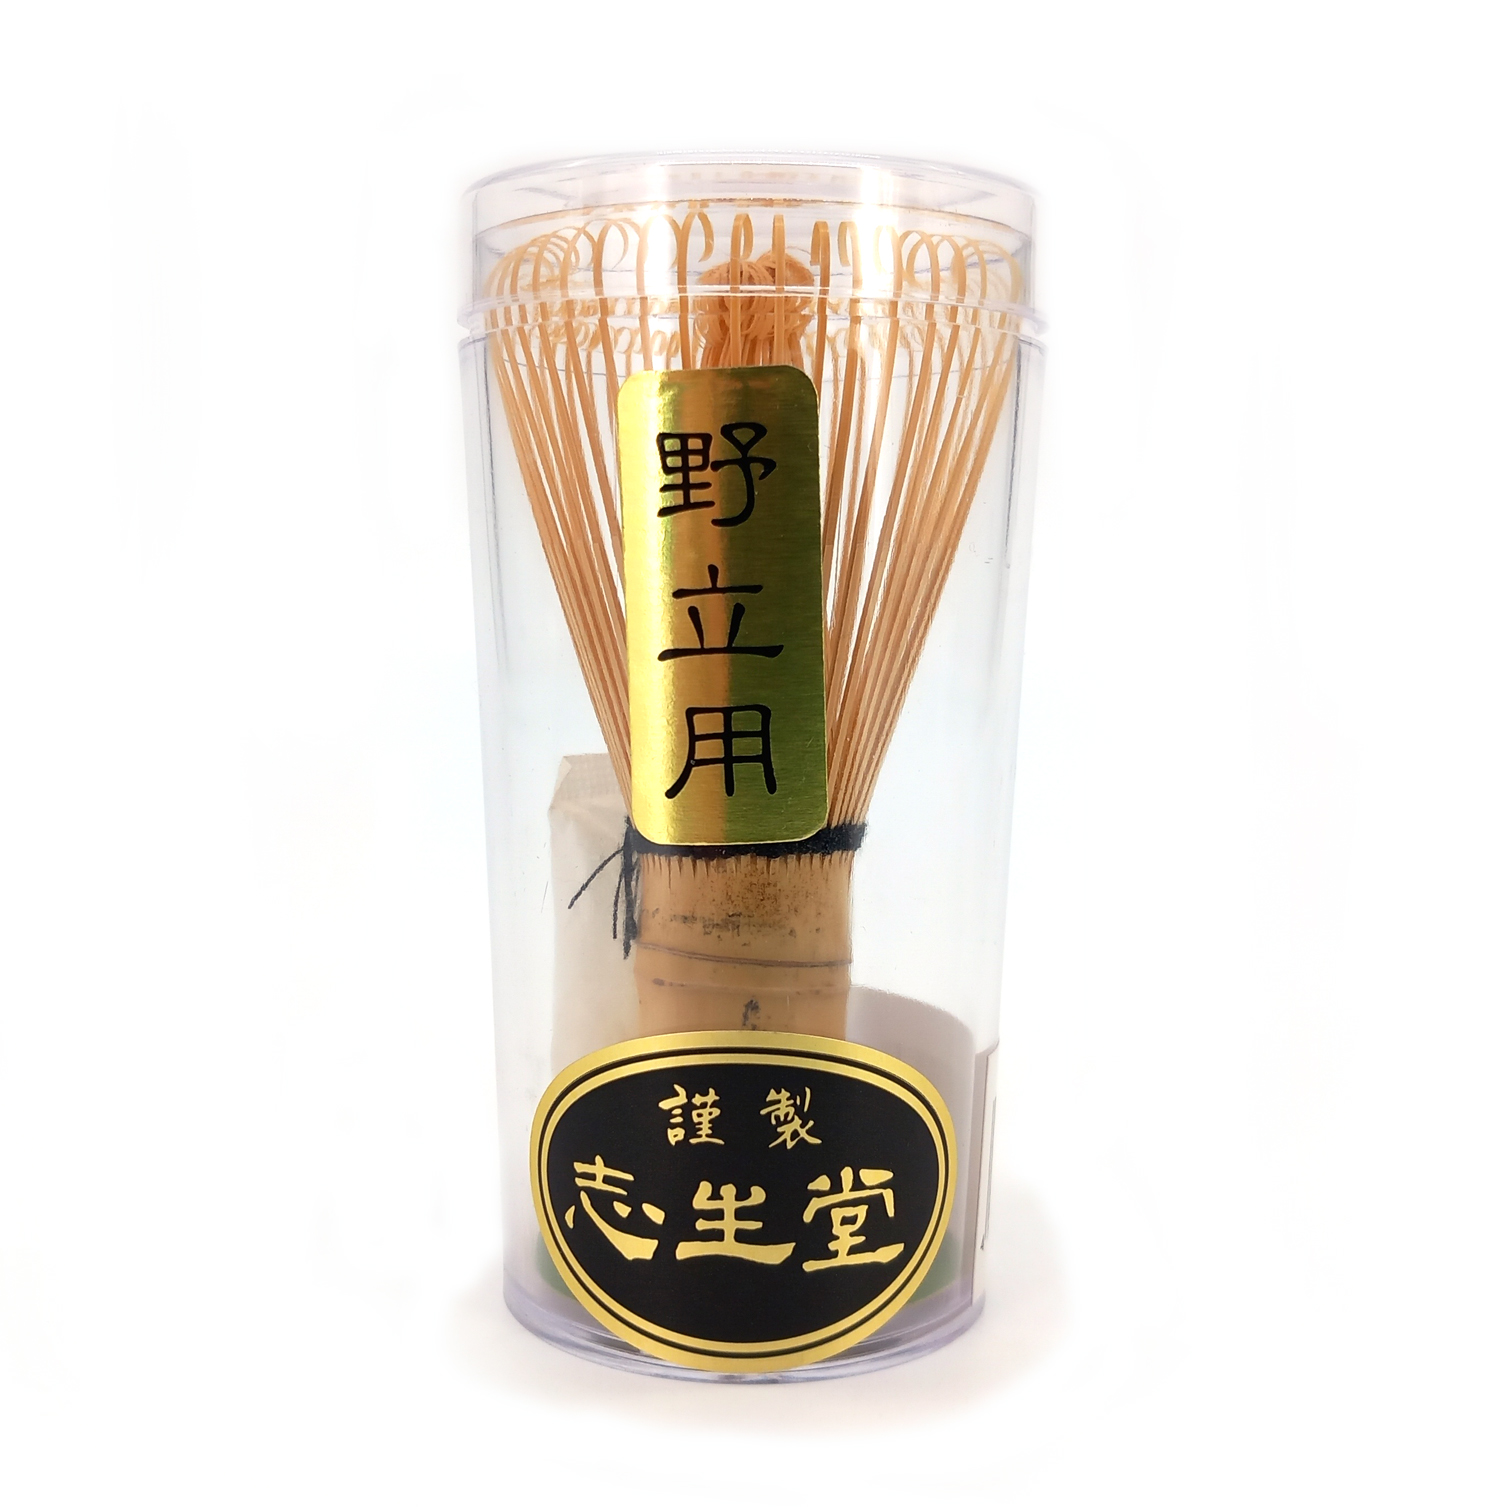  Batidor de té verde matcha de bambú natural Chasen